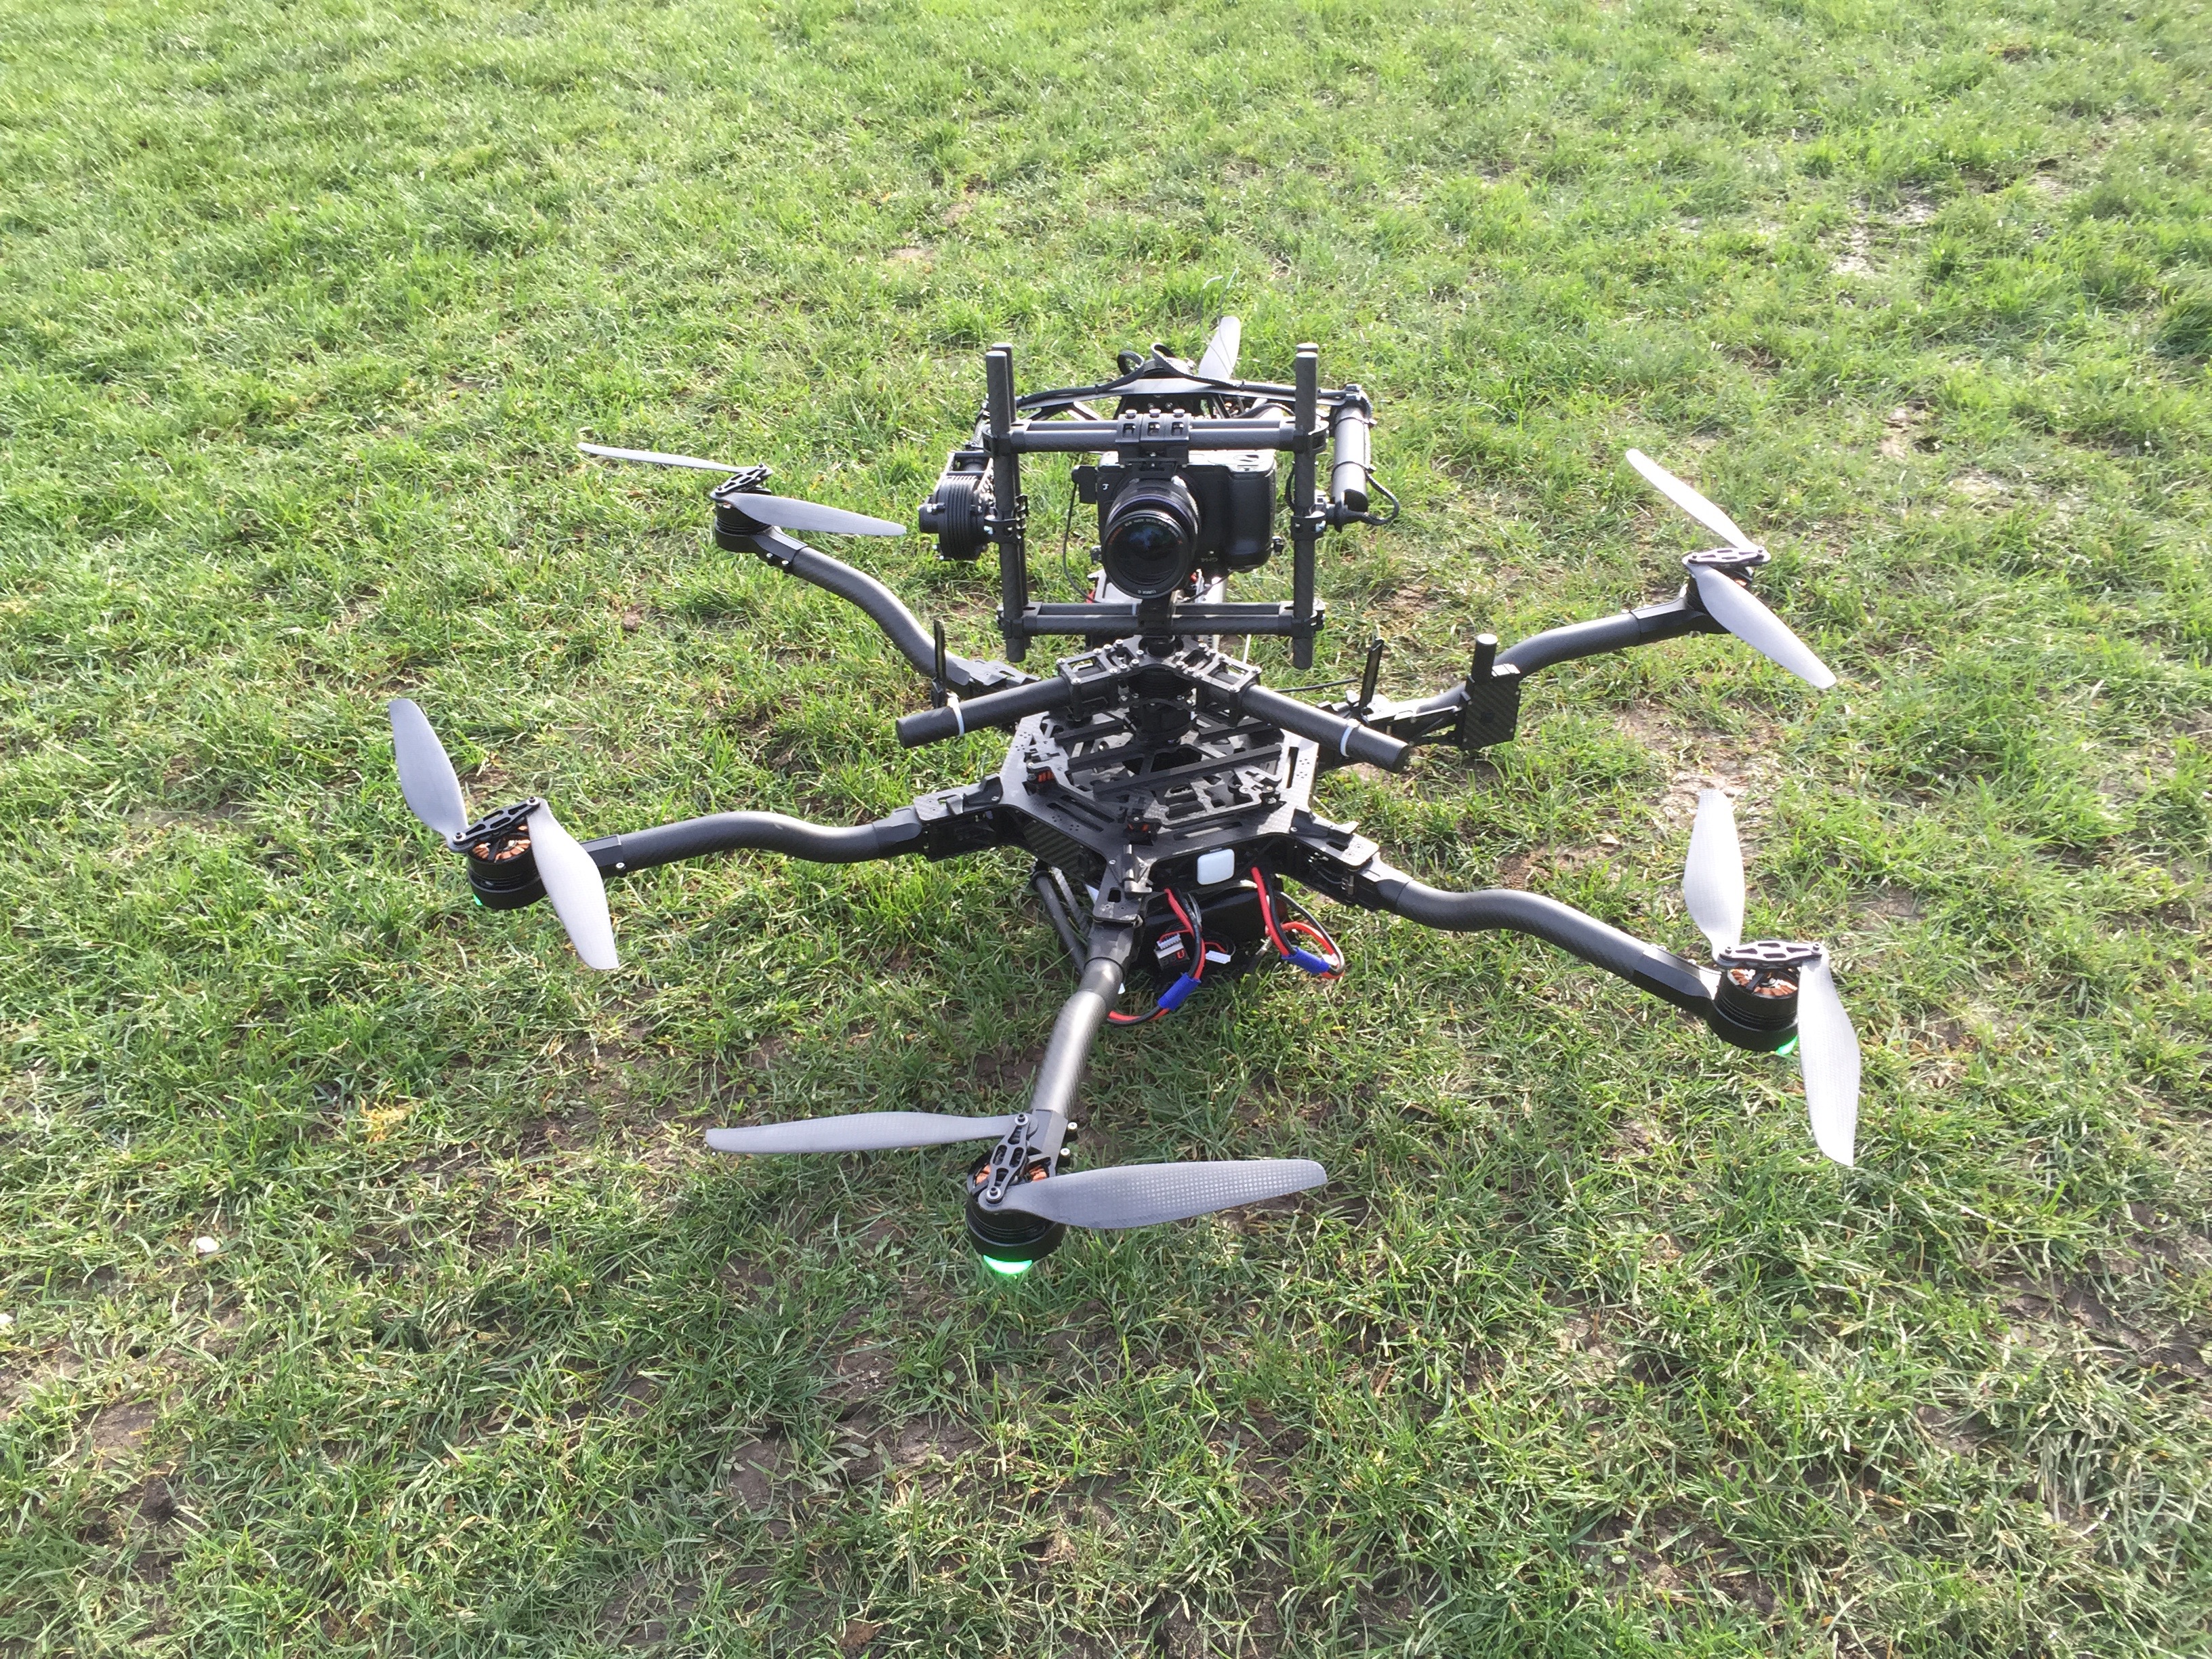 skydrone drone cinema alta